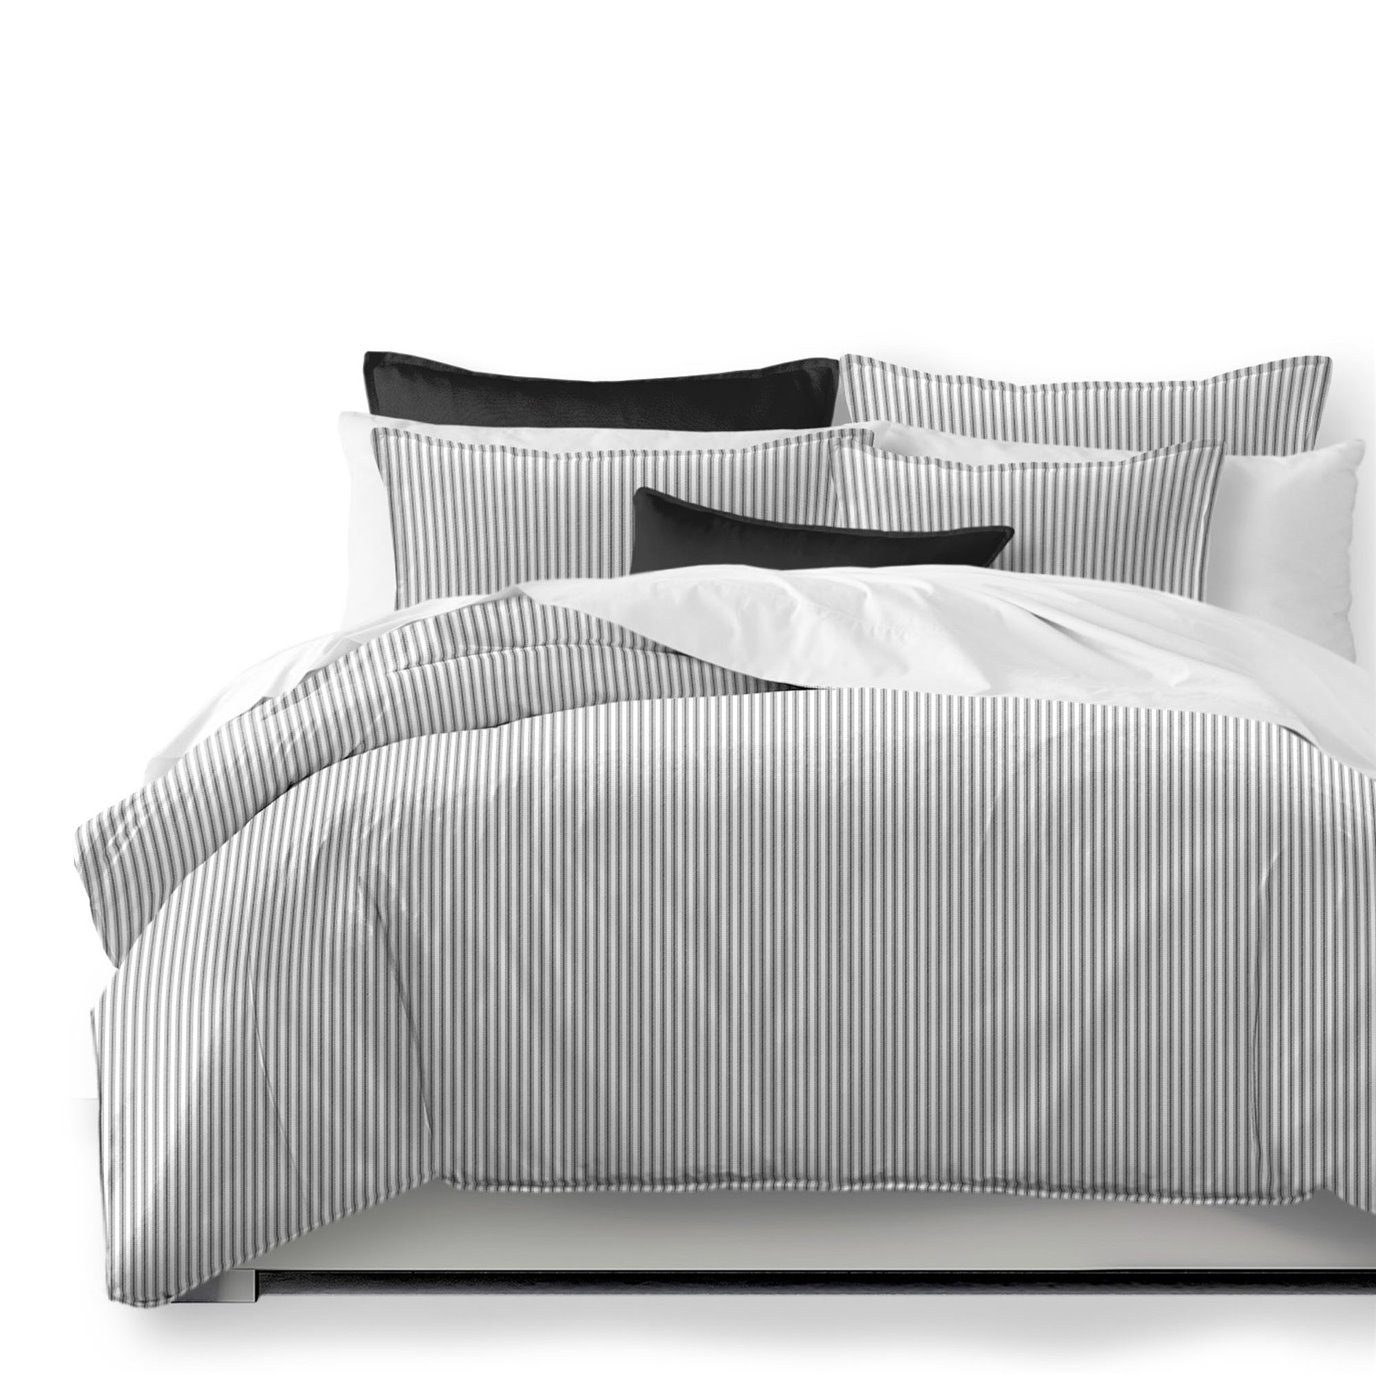 Cruz Ticking Stripes White/Black Comforter and Pillow Sham(s) Set - Size King / California King